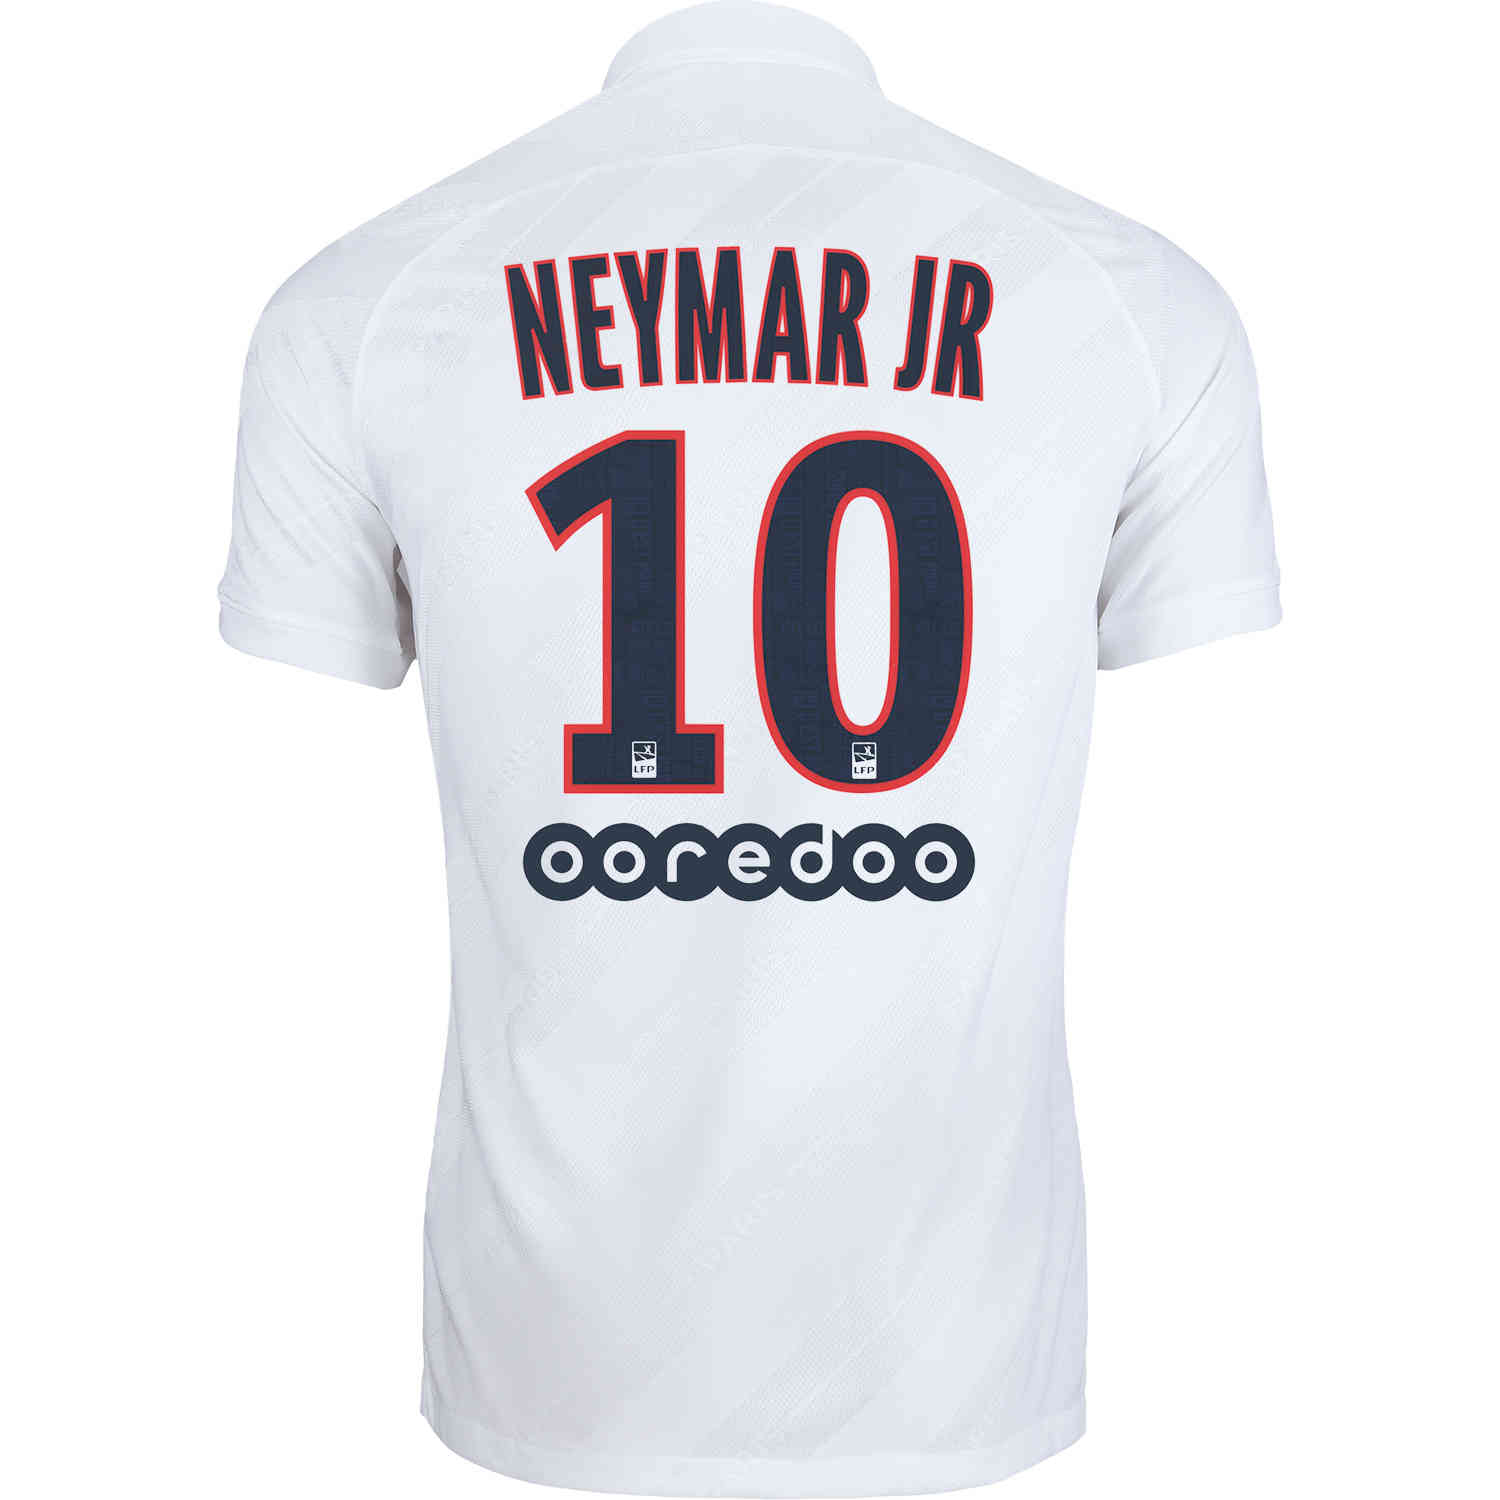 neymar jersey 2019